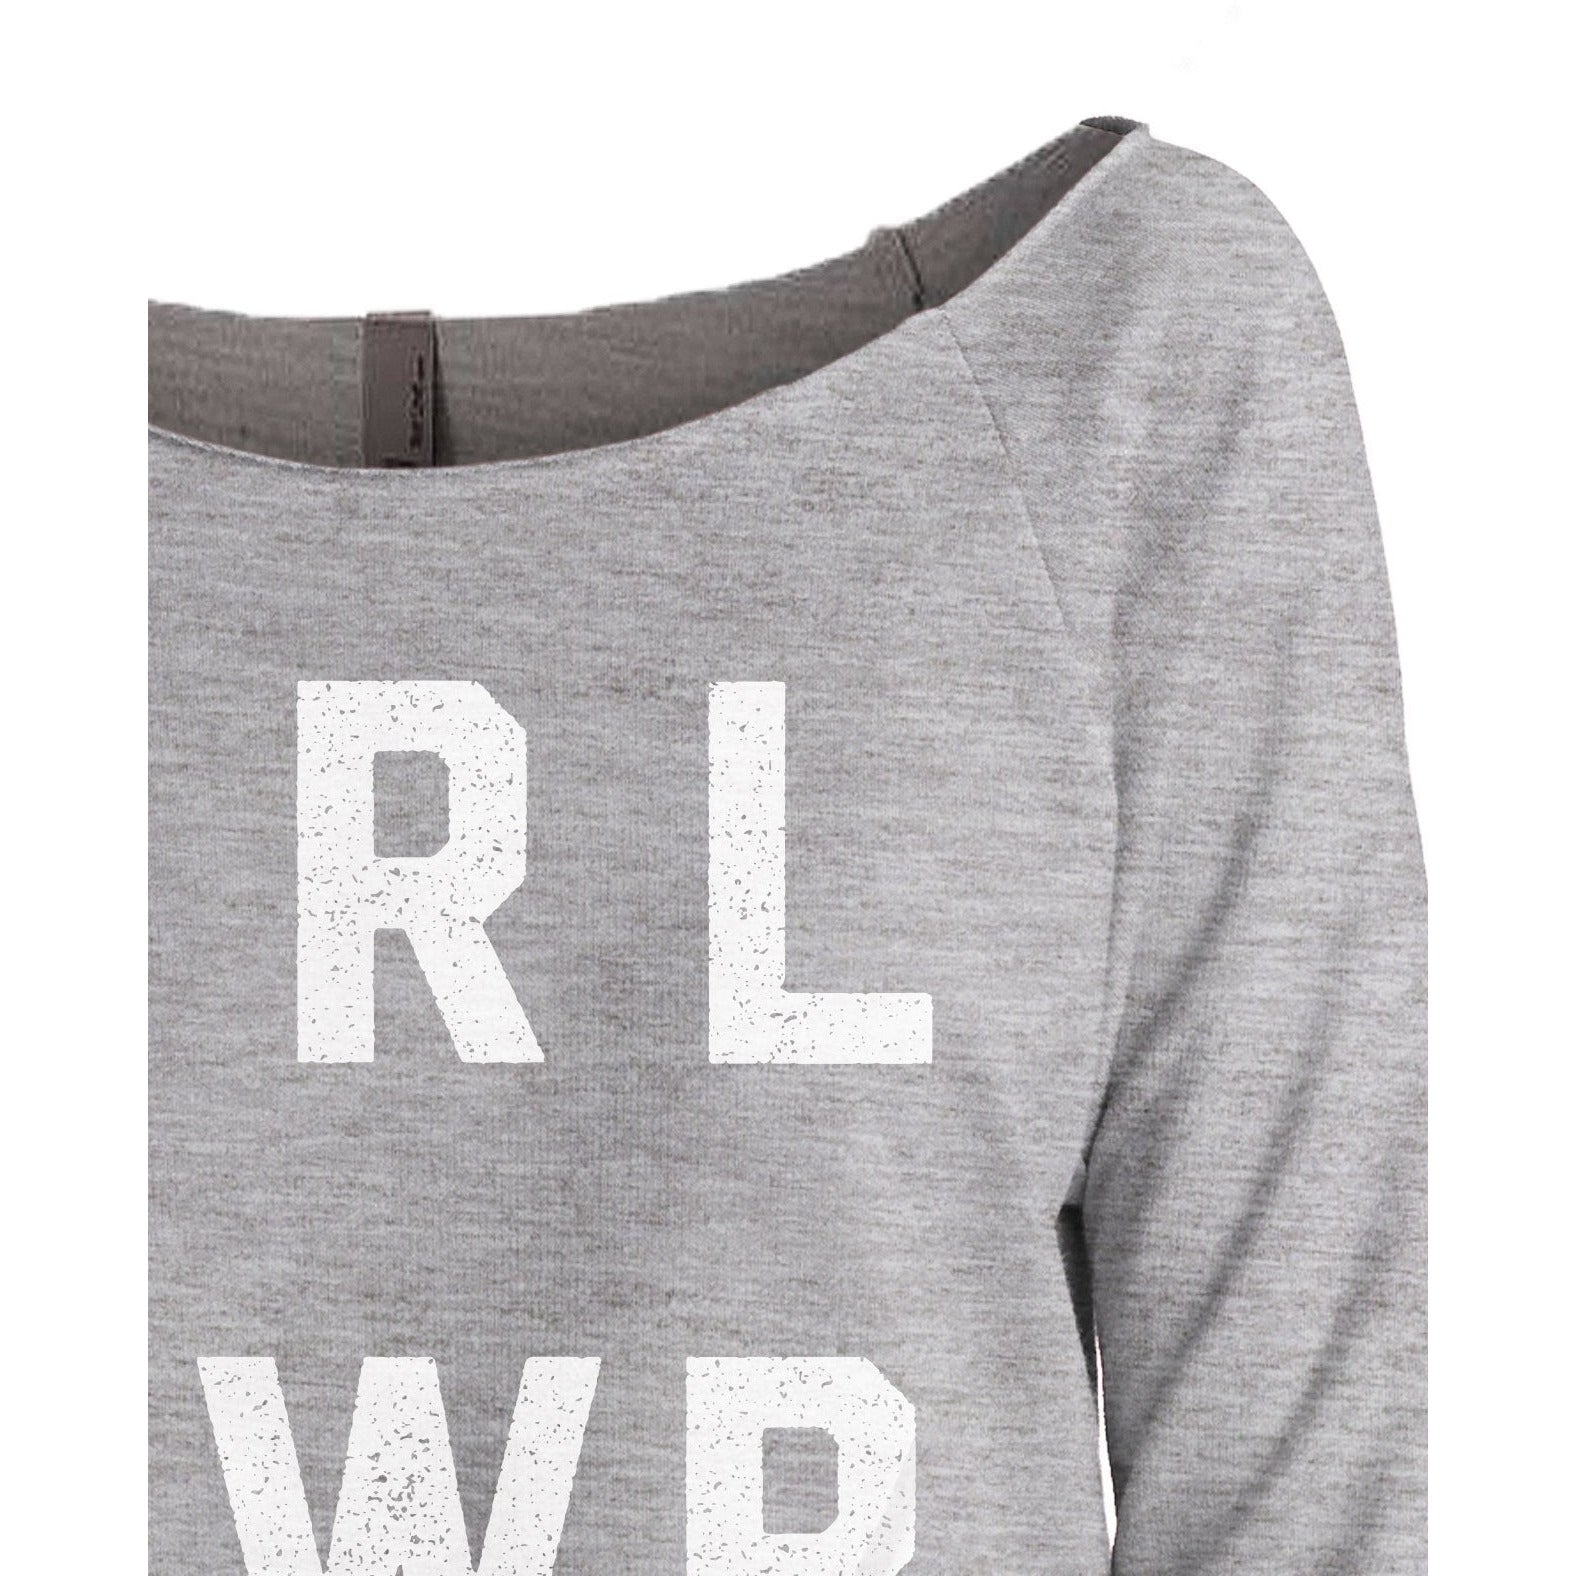 GRL PWR Girl Power Women's Graphic Printed Lightweight Slouchy 3/4 Sleeves Sweatshirt Sport Grey Closeup